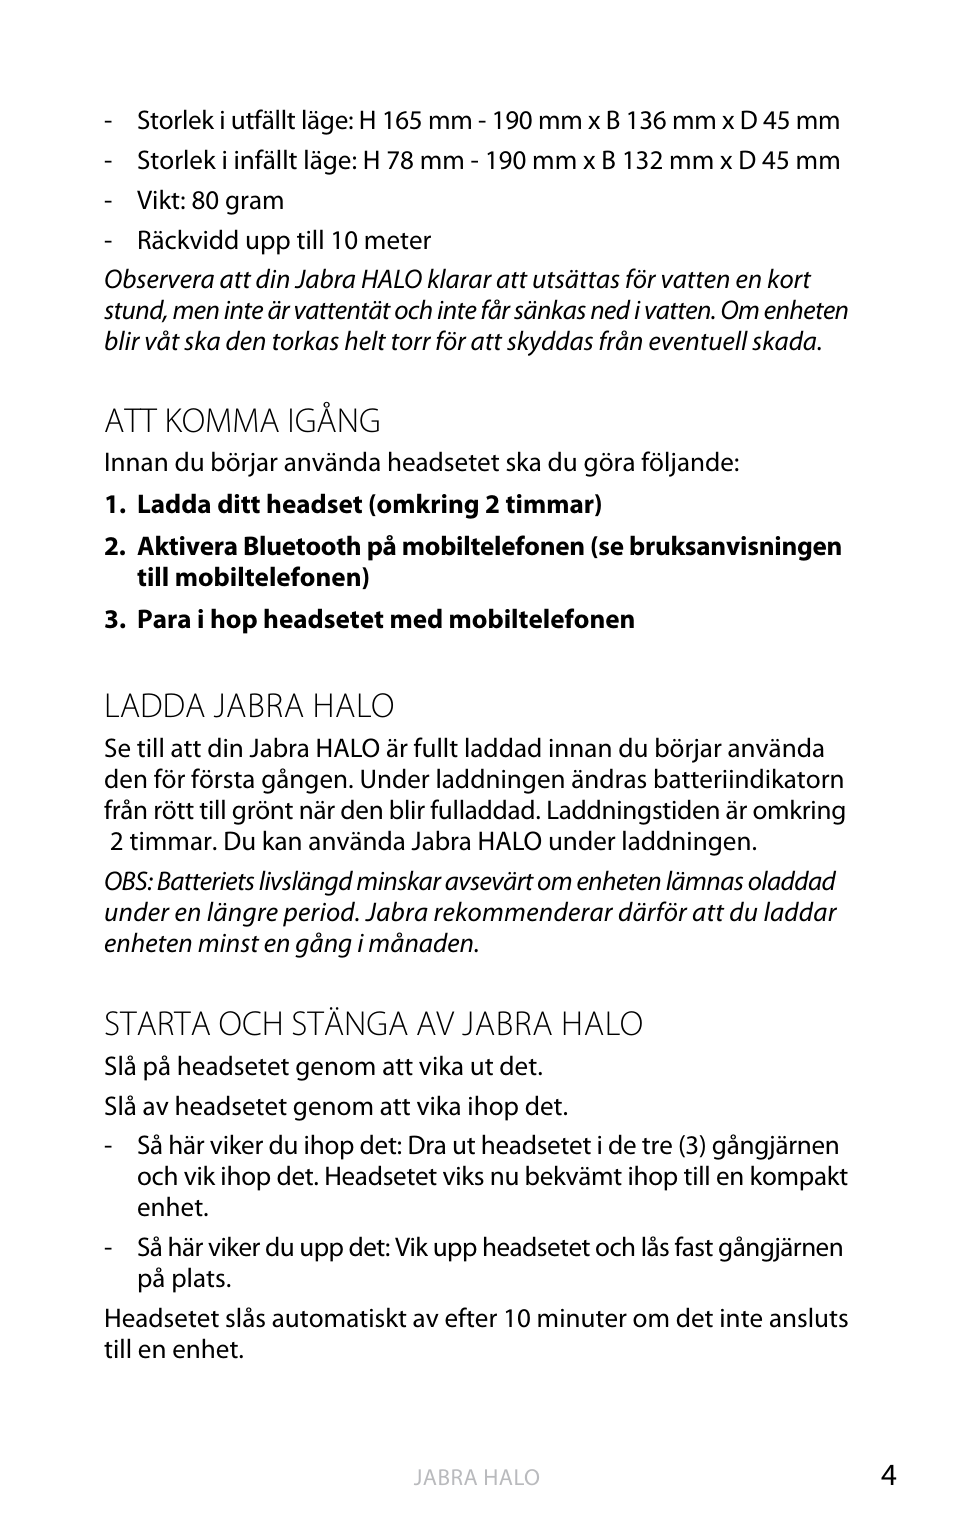 English, Att komma igång, Ladda jabra halo | Jabra HALO BT650s User Manual  | Page 199 / 518